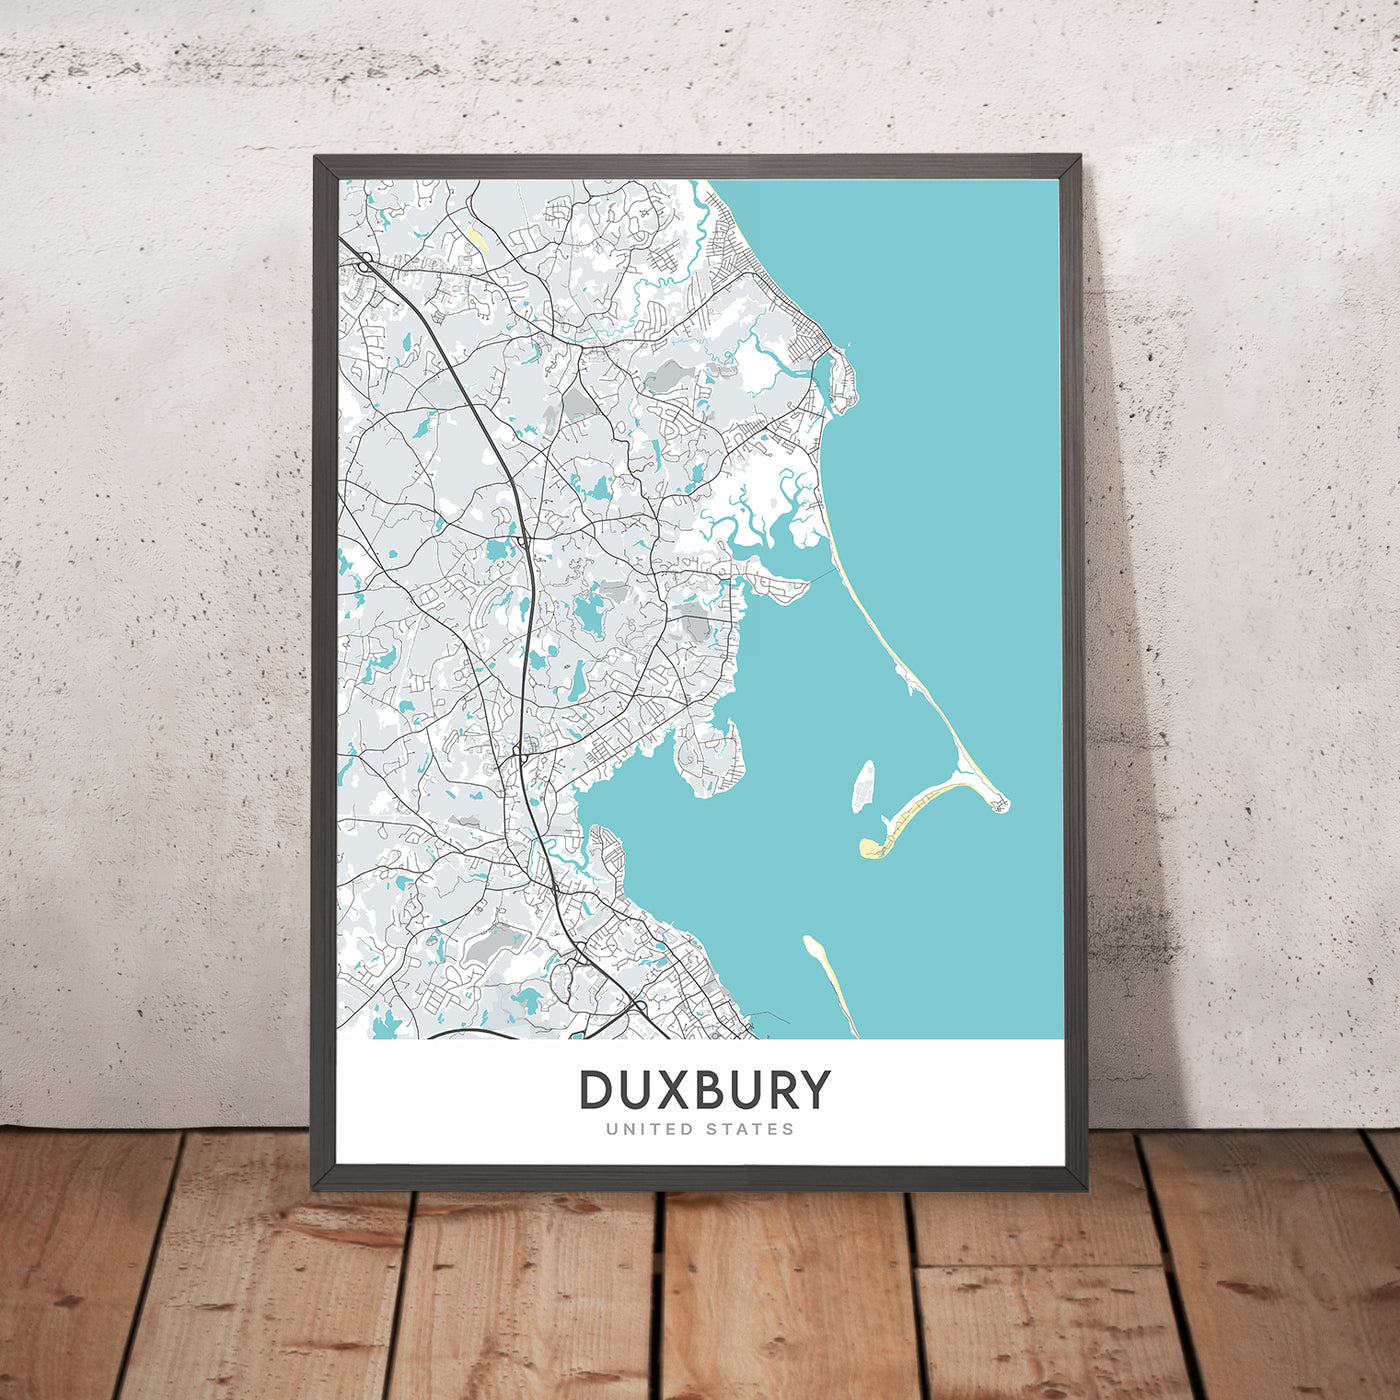 Mapa moderno de la ciudad de Duxbury, MA: Playa de Duxbury, Club de yates de Duxbury, Gurnet Point, Monumento a Myles Standish, Puente Powder Point